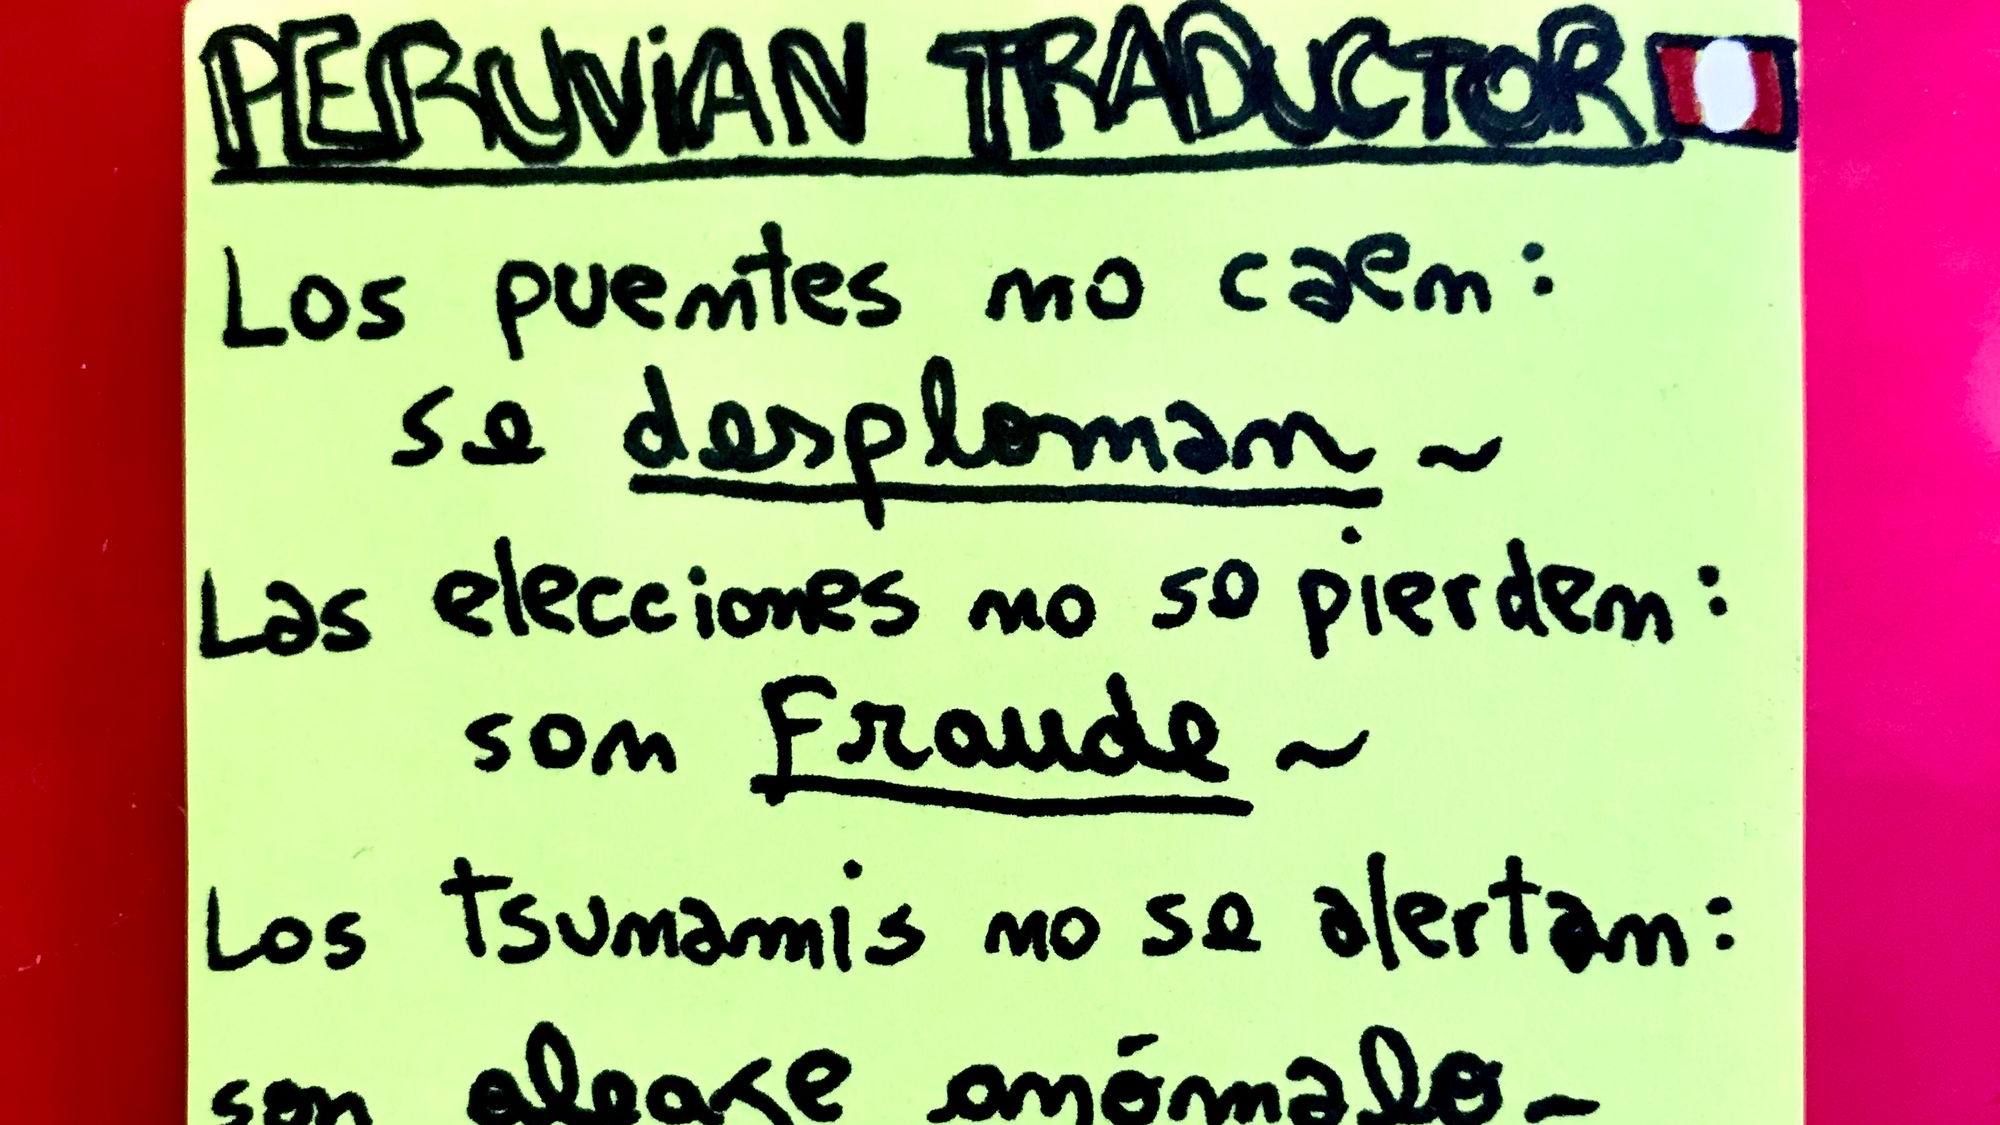 Peruvian Traductor, Epicentro TV